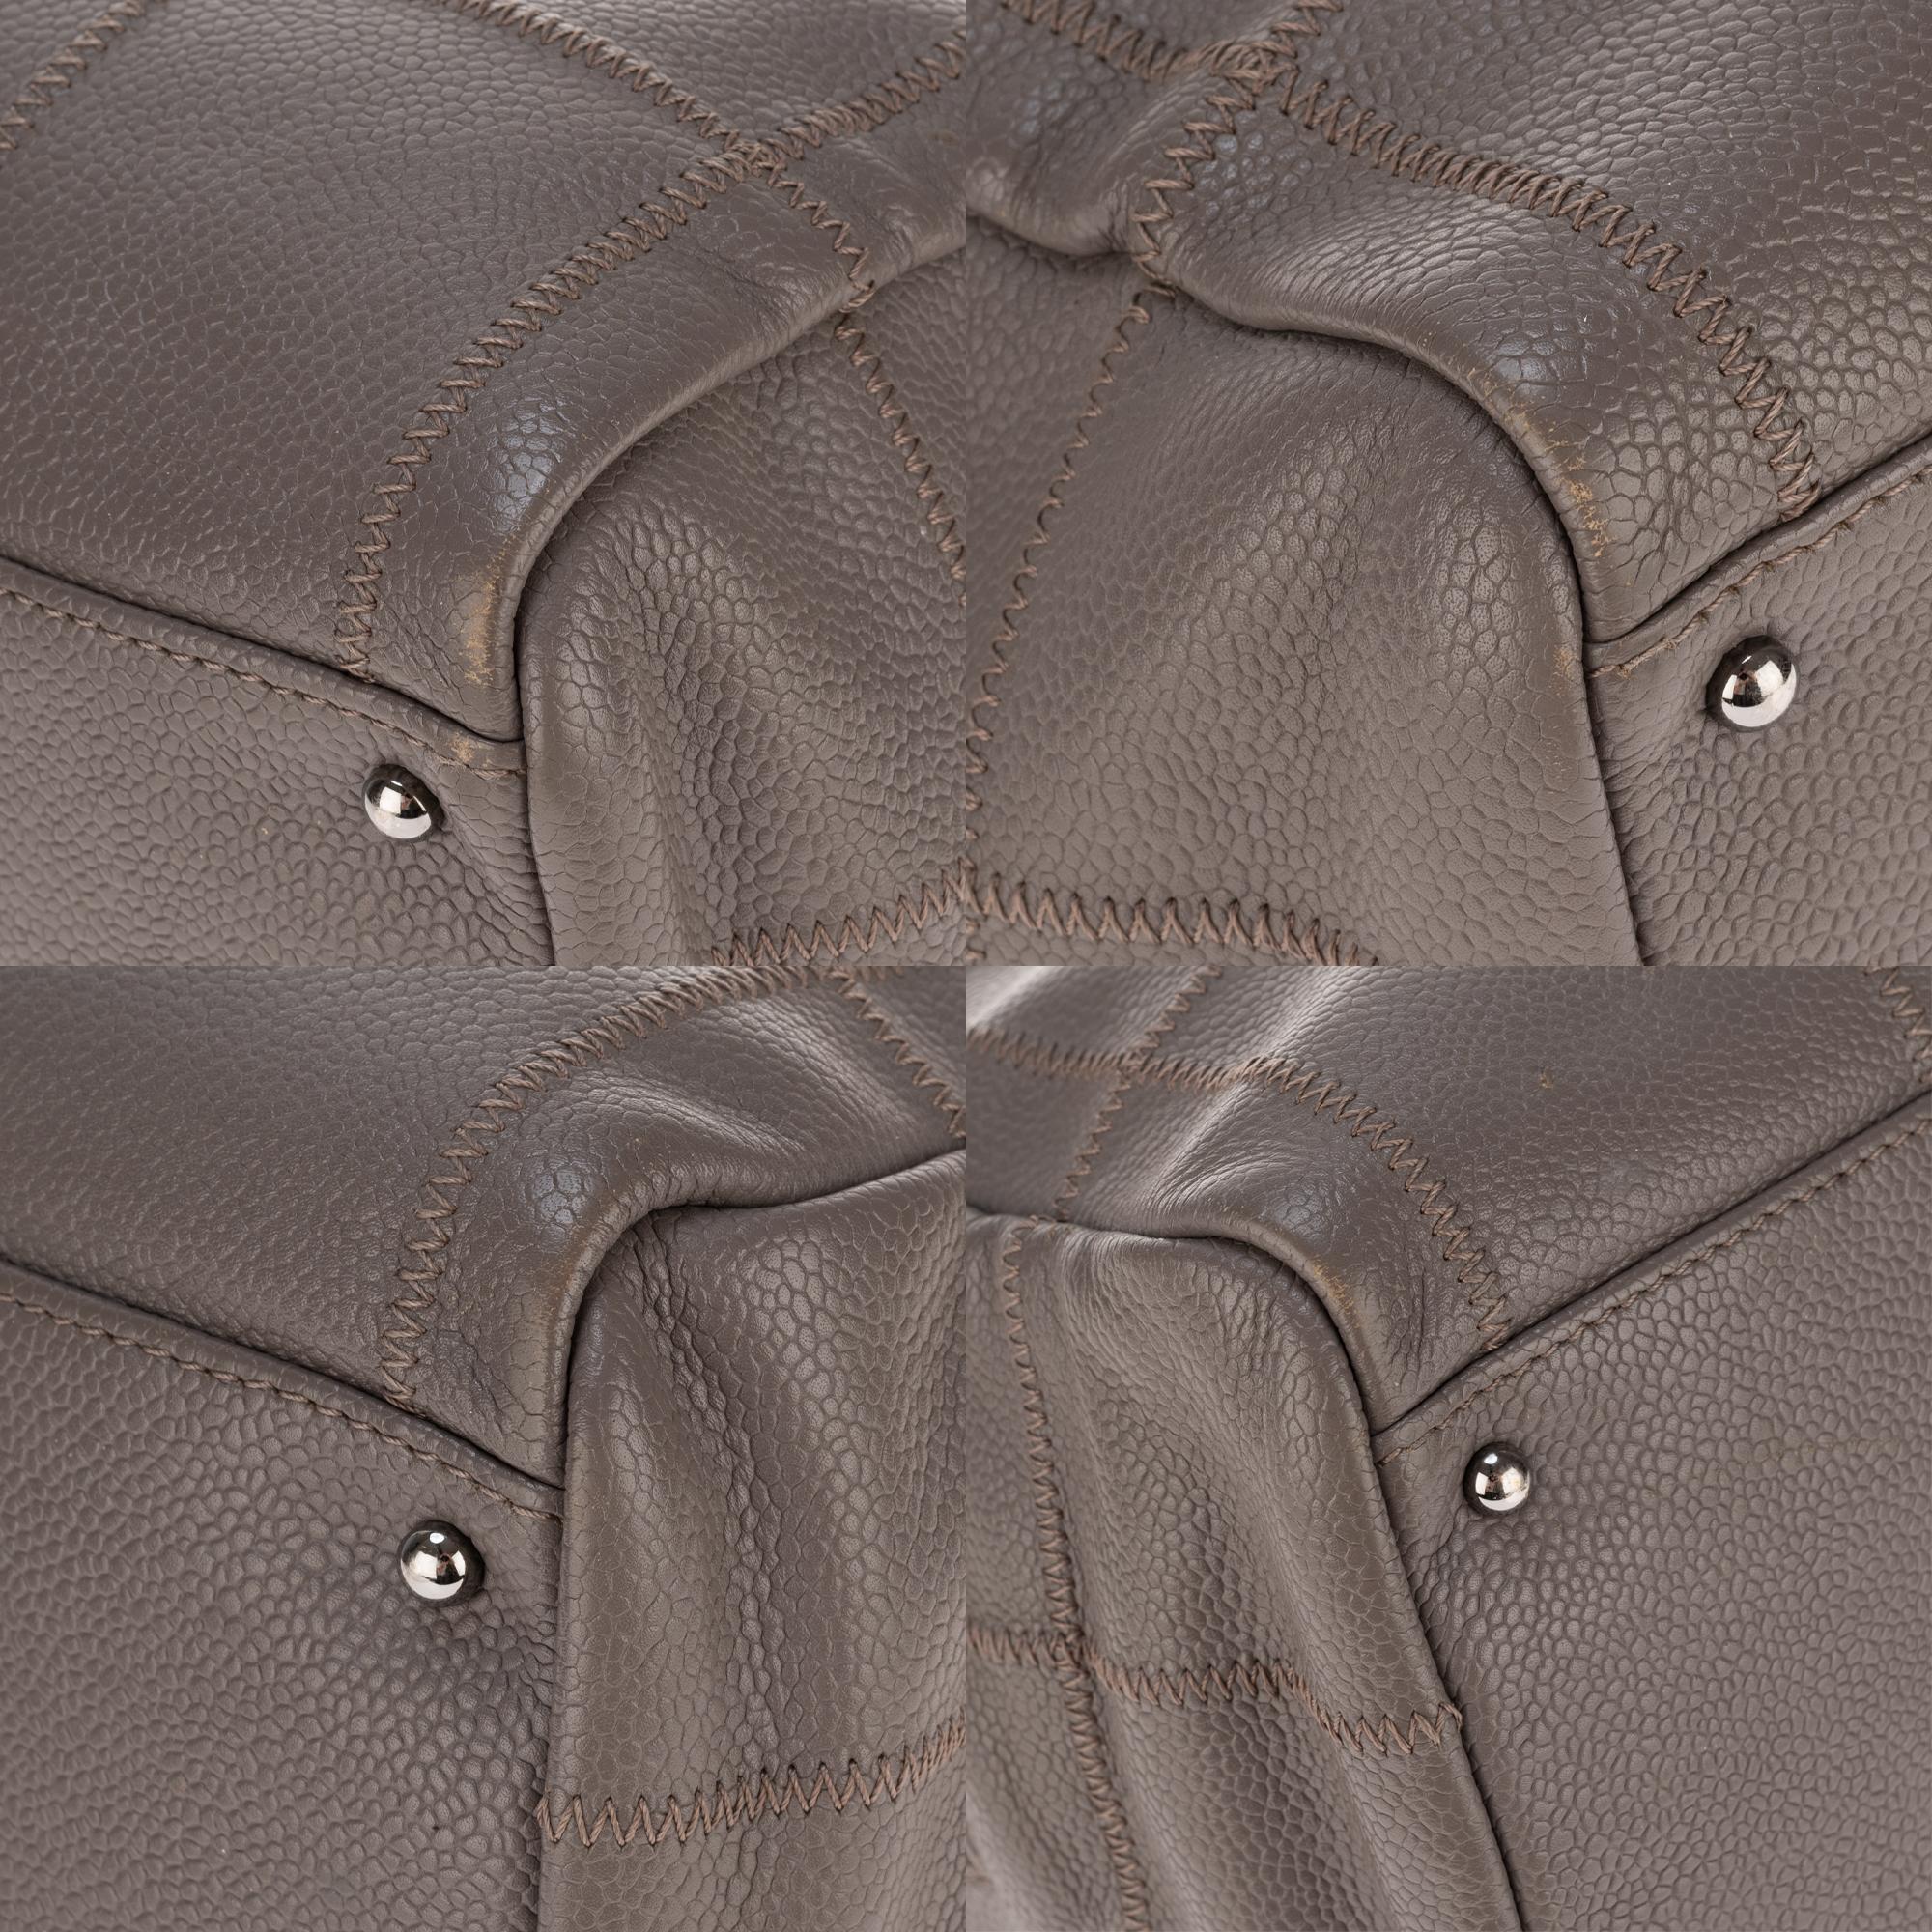 Chanel cube handbag in grey caviar leather in very good condition! 1